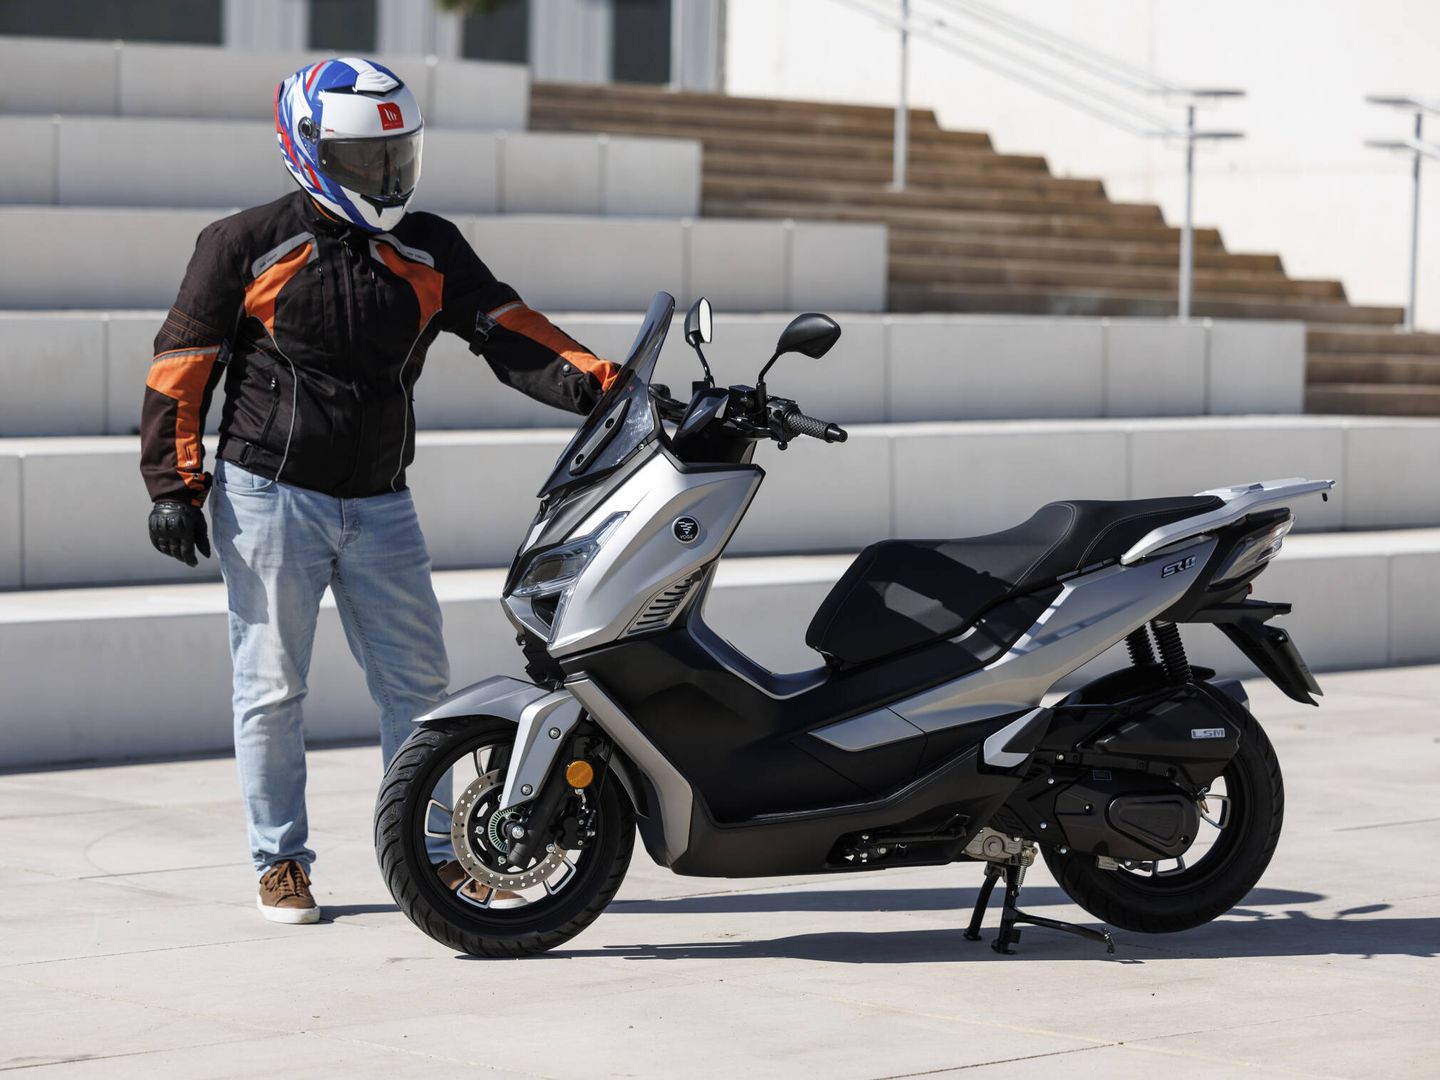 Para ser un scooter de 125 cc, mucha tecnología: ABS de doble canal, control de tracción, avisador de frenada de emergencia, cámara frontal...